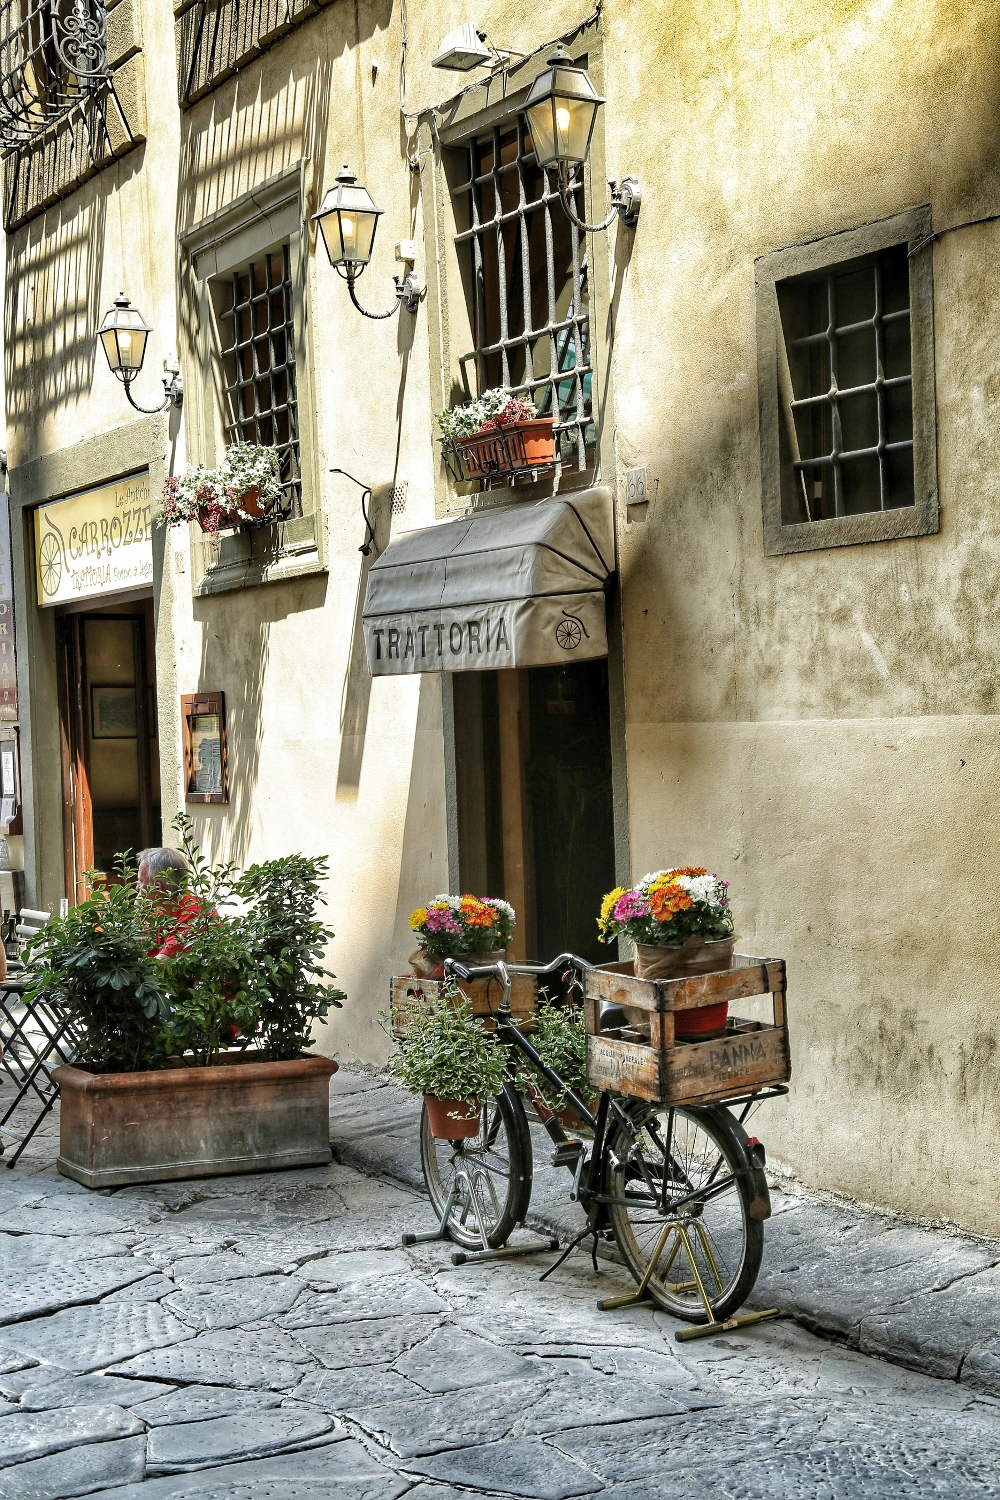  Toscana dreaming ♡
#freetoedit